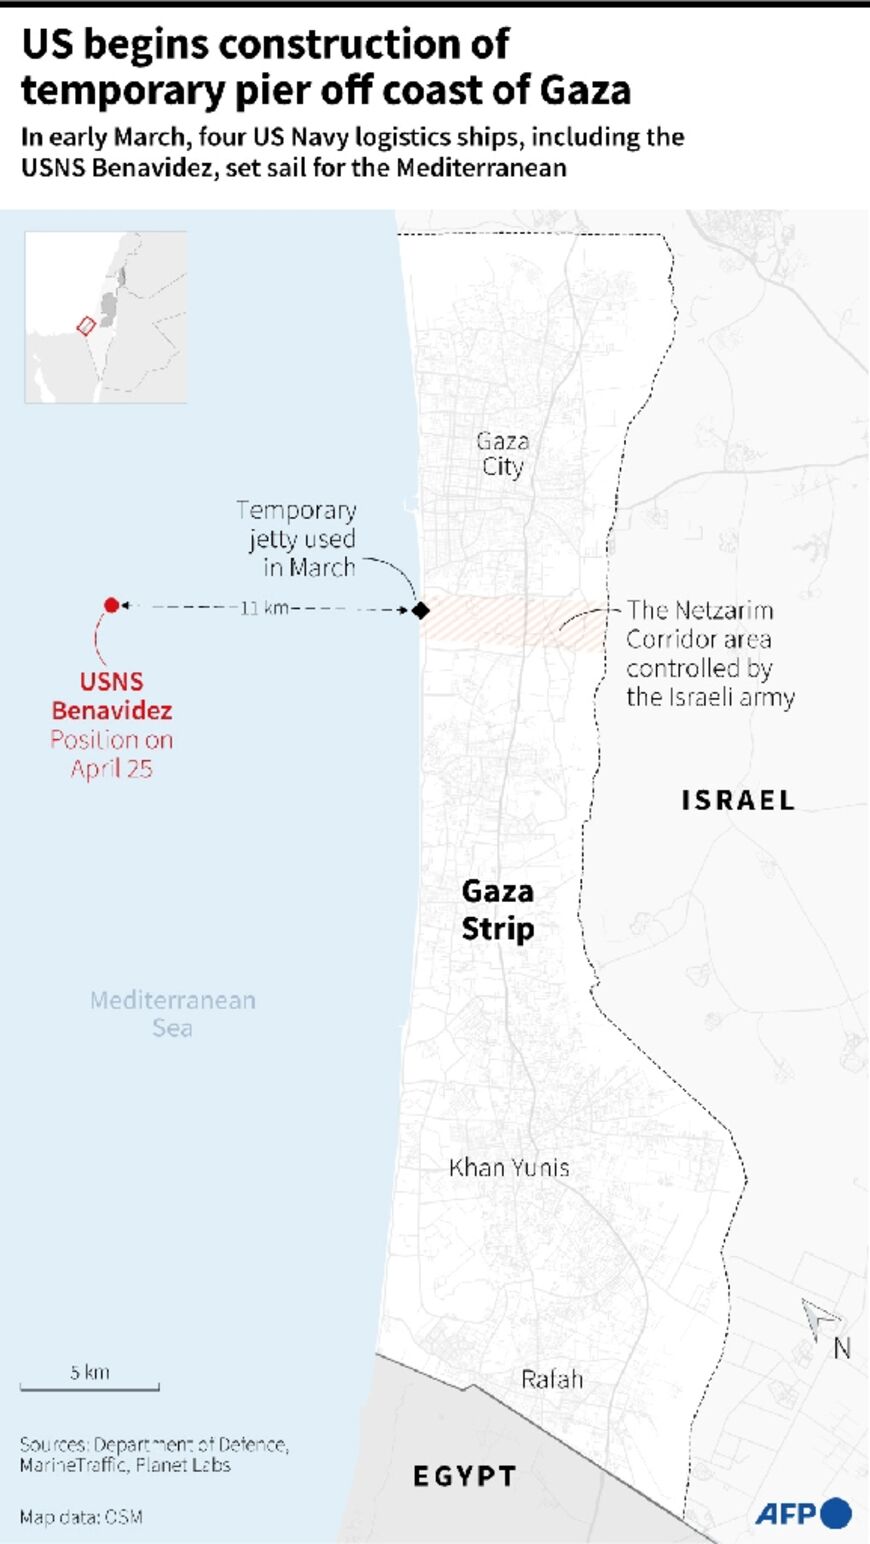 US begins construction of temporary pier off coast of Gaza